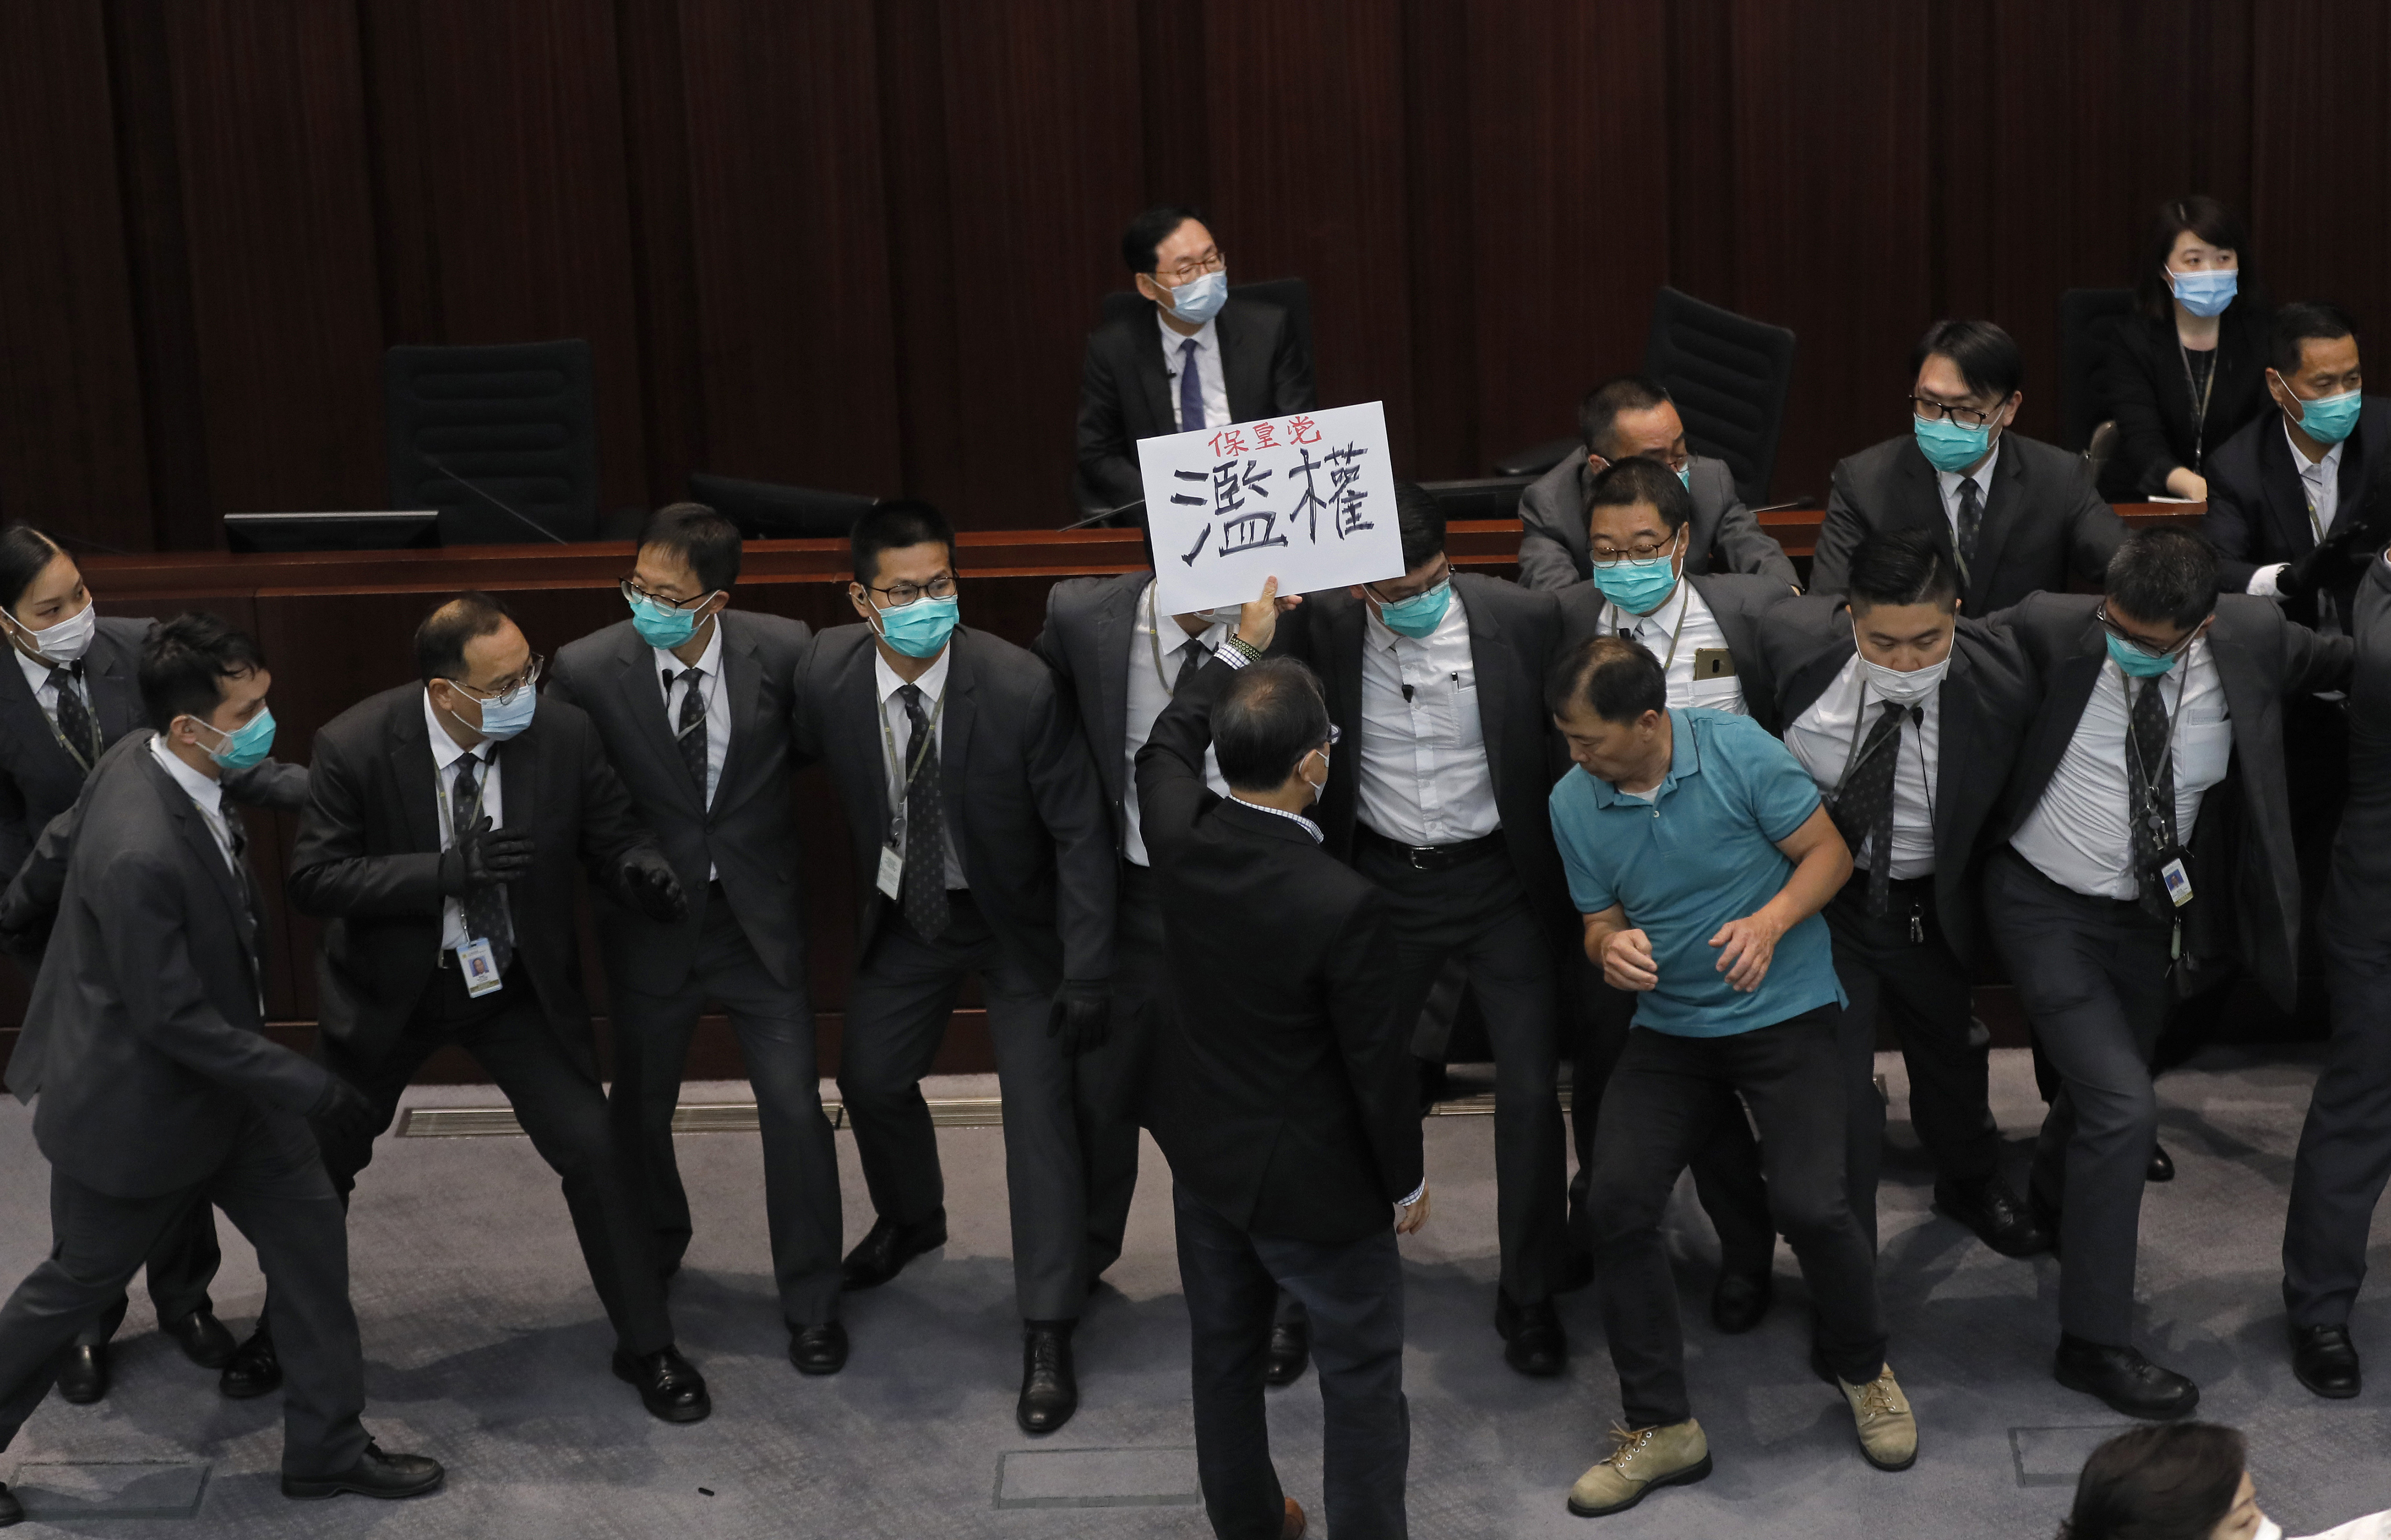 Pan-democratic legislator, Wu Chi-wai, right in green shirt, scuffles with security guards during a Legislative Council's House Committee meeting in Hong Kong